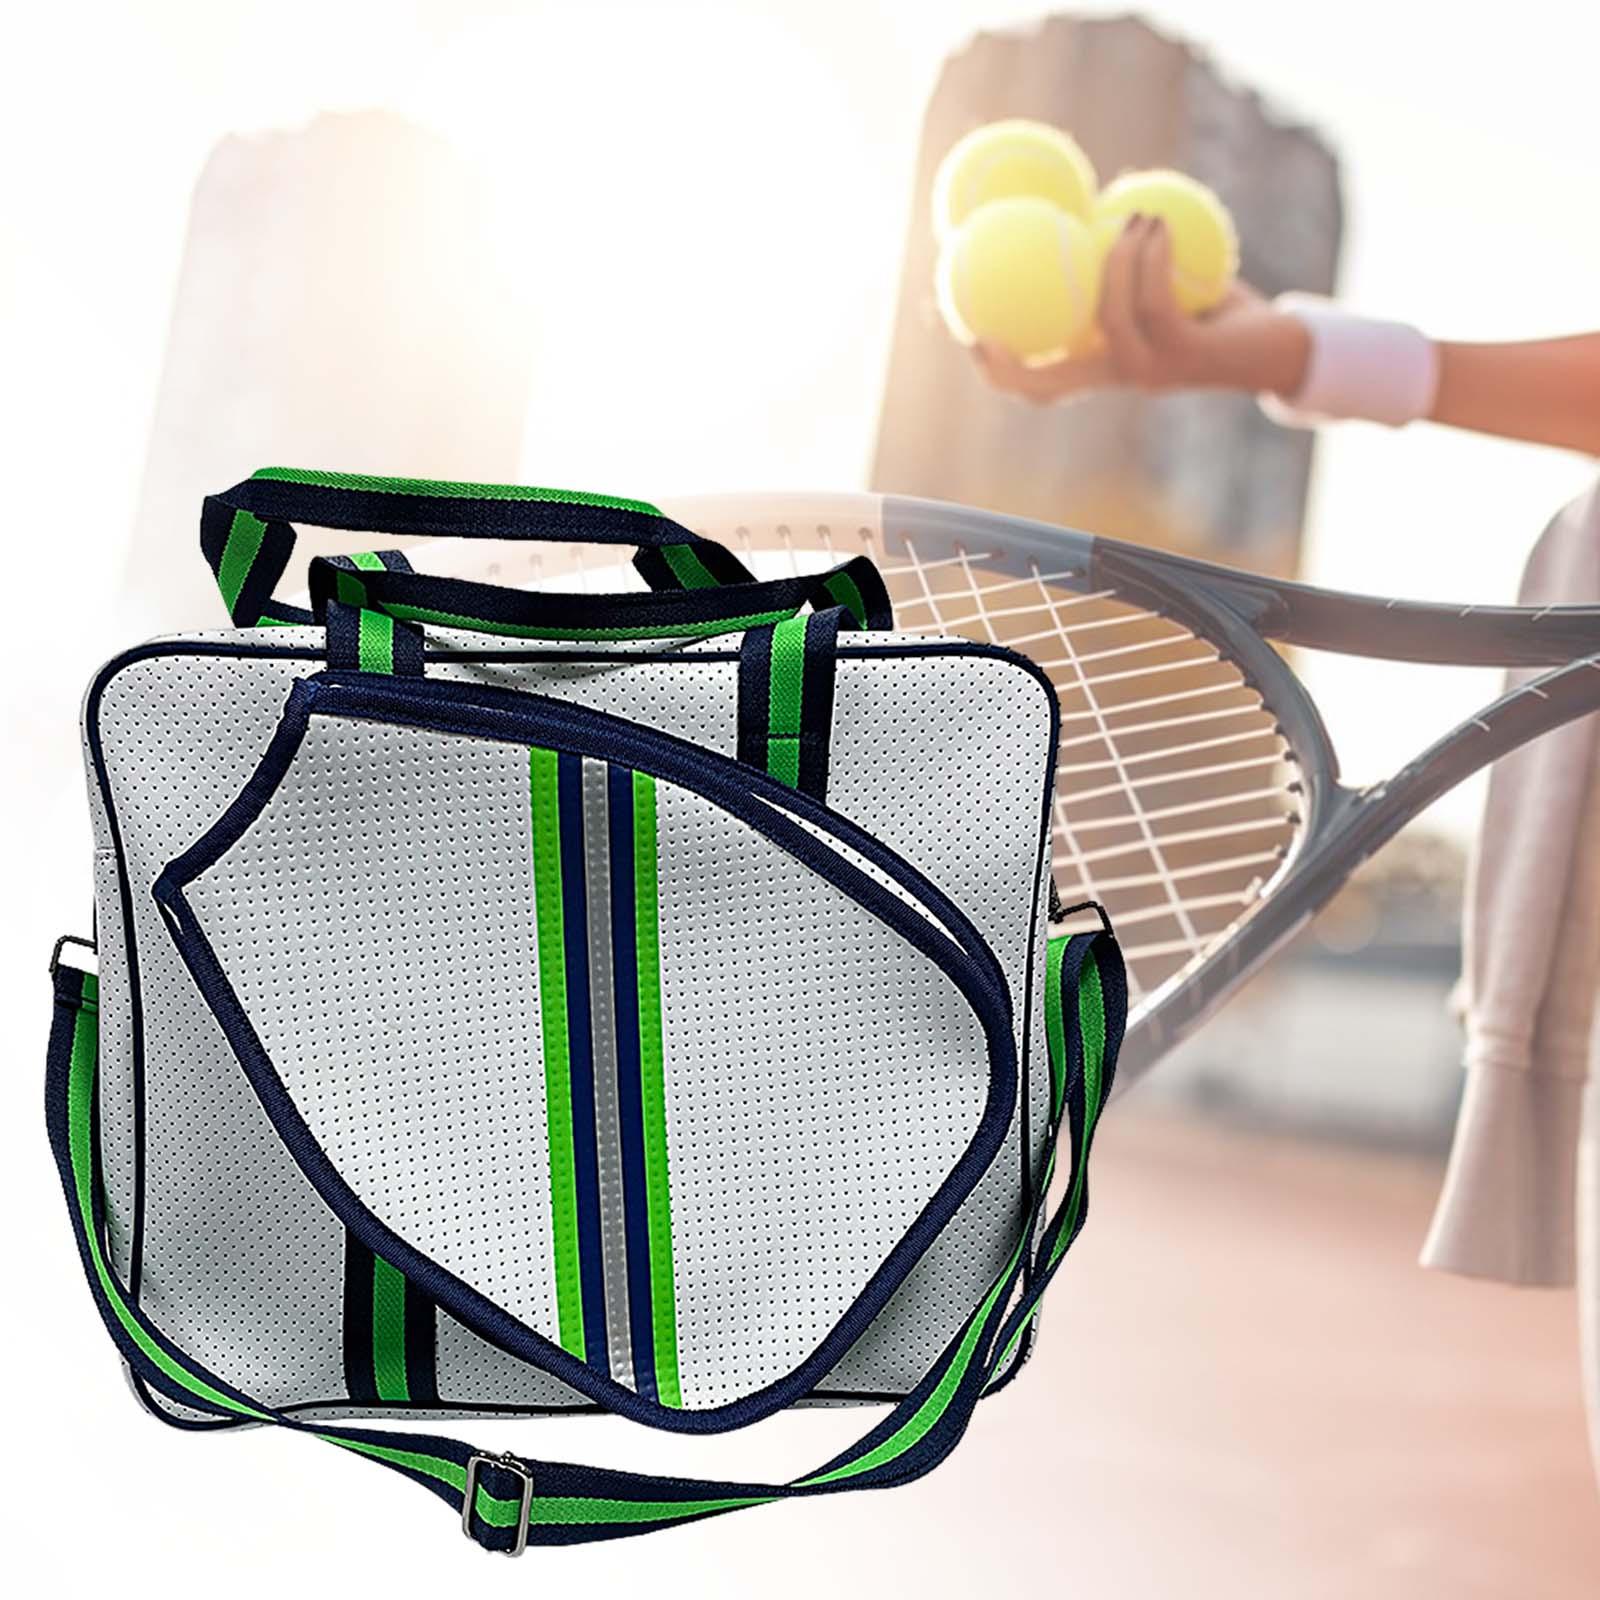 Badminton Bag Carrying Bag Racquet Covers Multifunctional Outdoor Tennis Bag style C